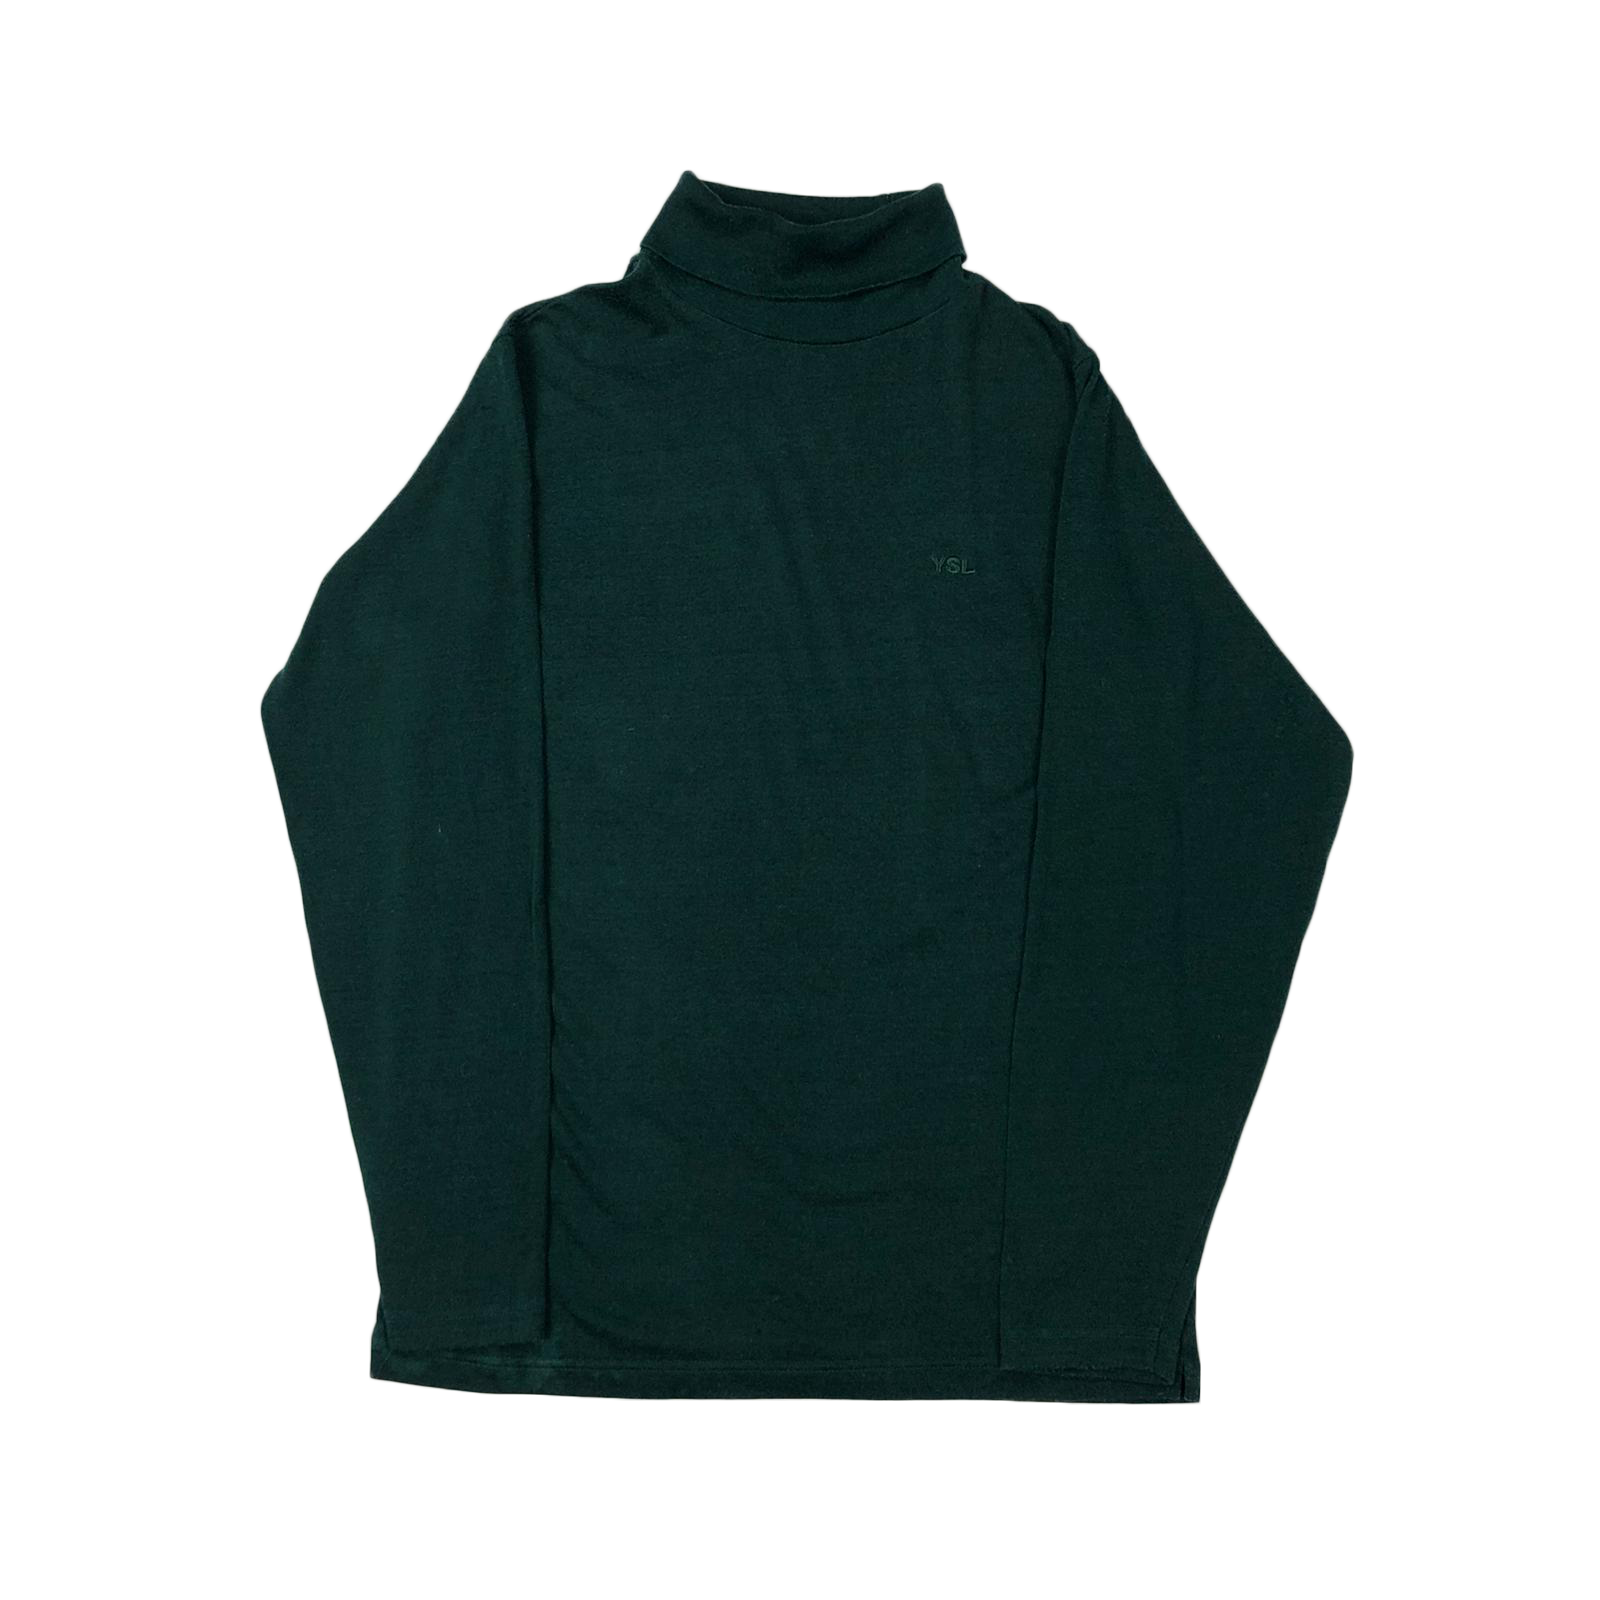 YSL turtleneck lightweight sweatshirt